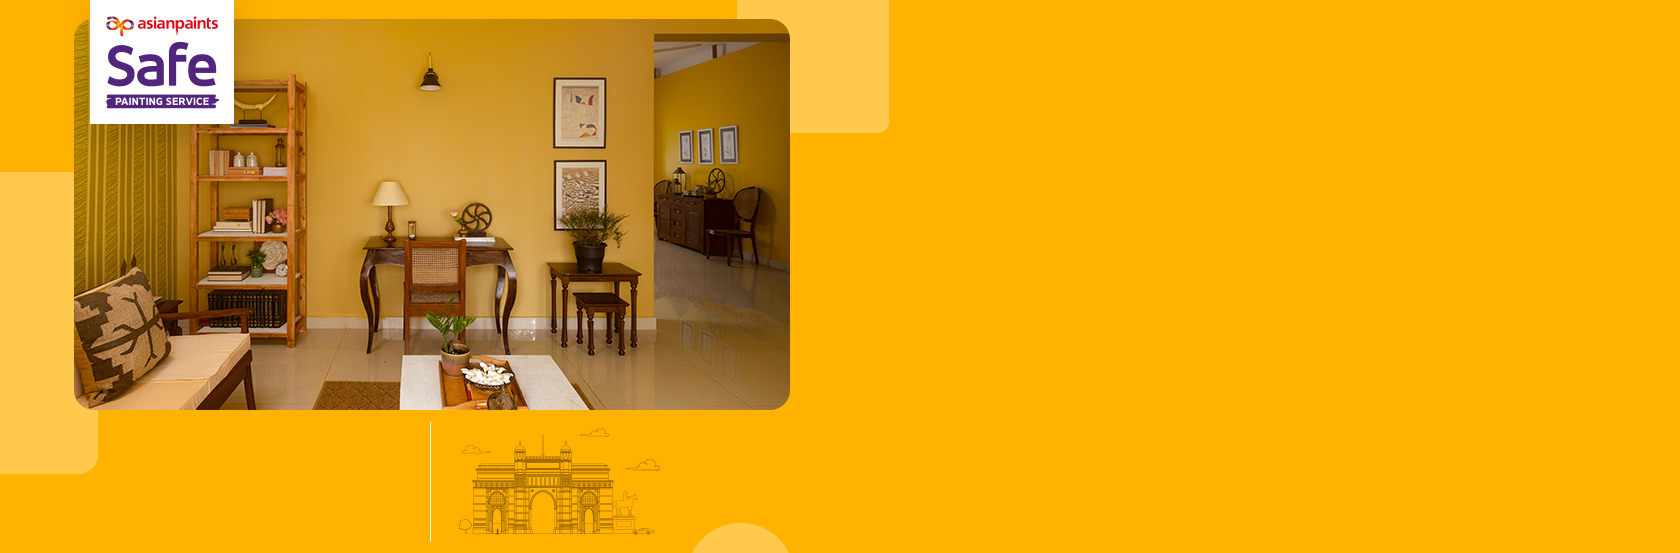 Safe Painting Services in Kalyan, Mumbai for your home design - Asain Paints